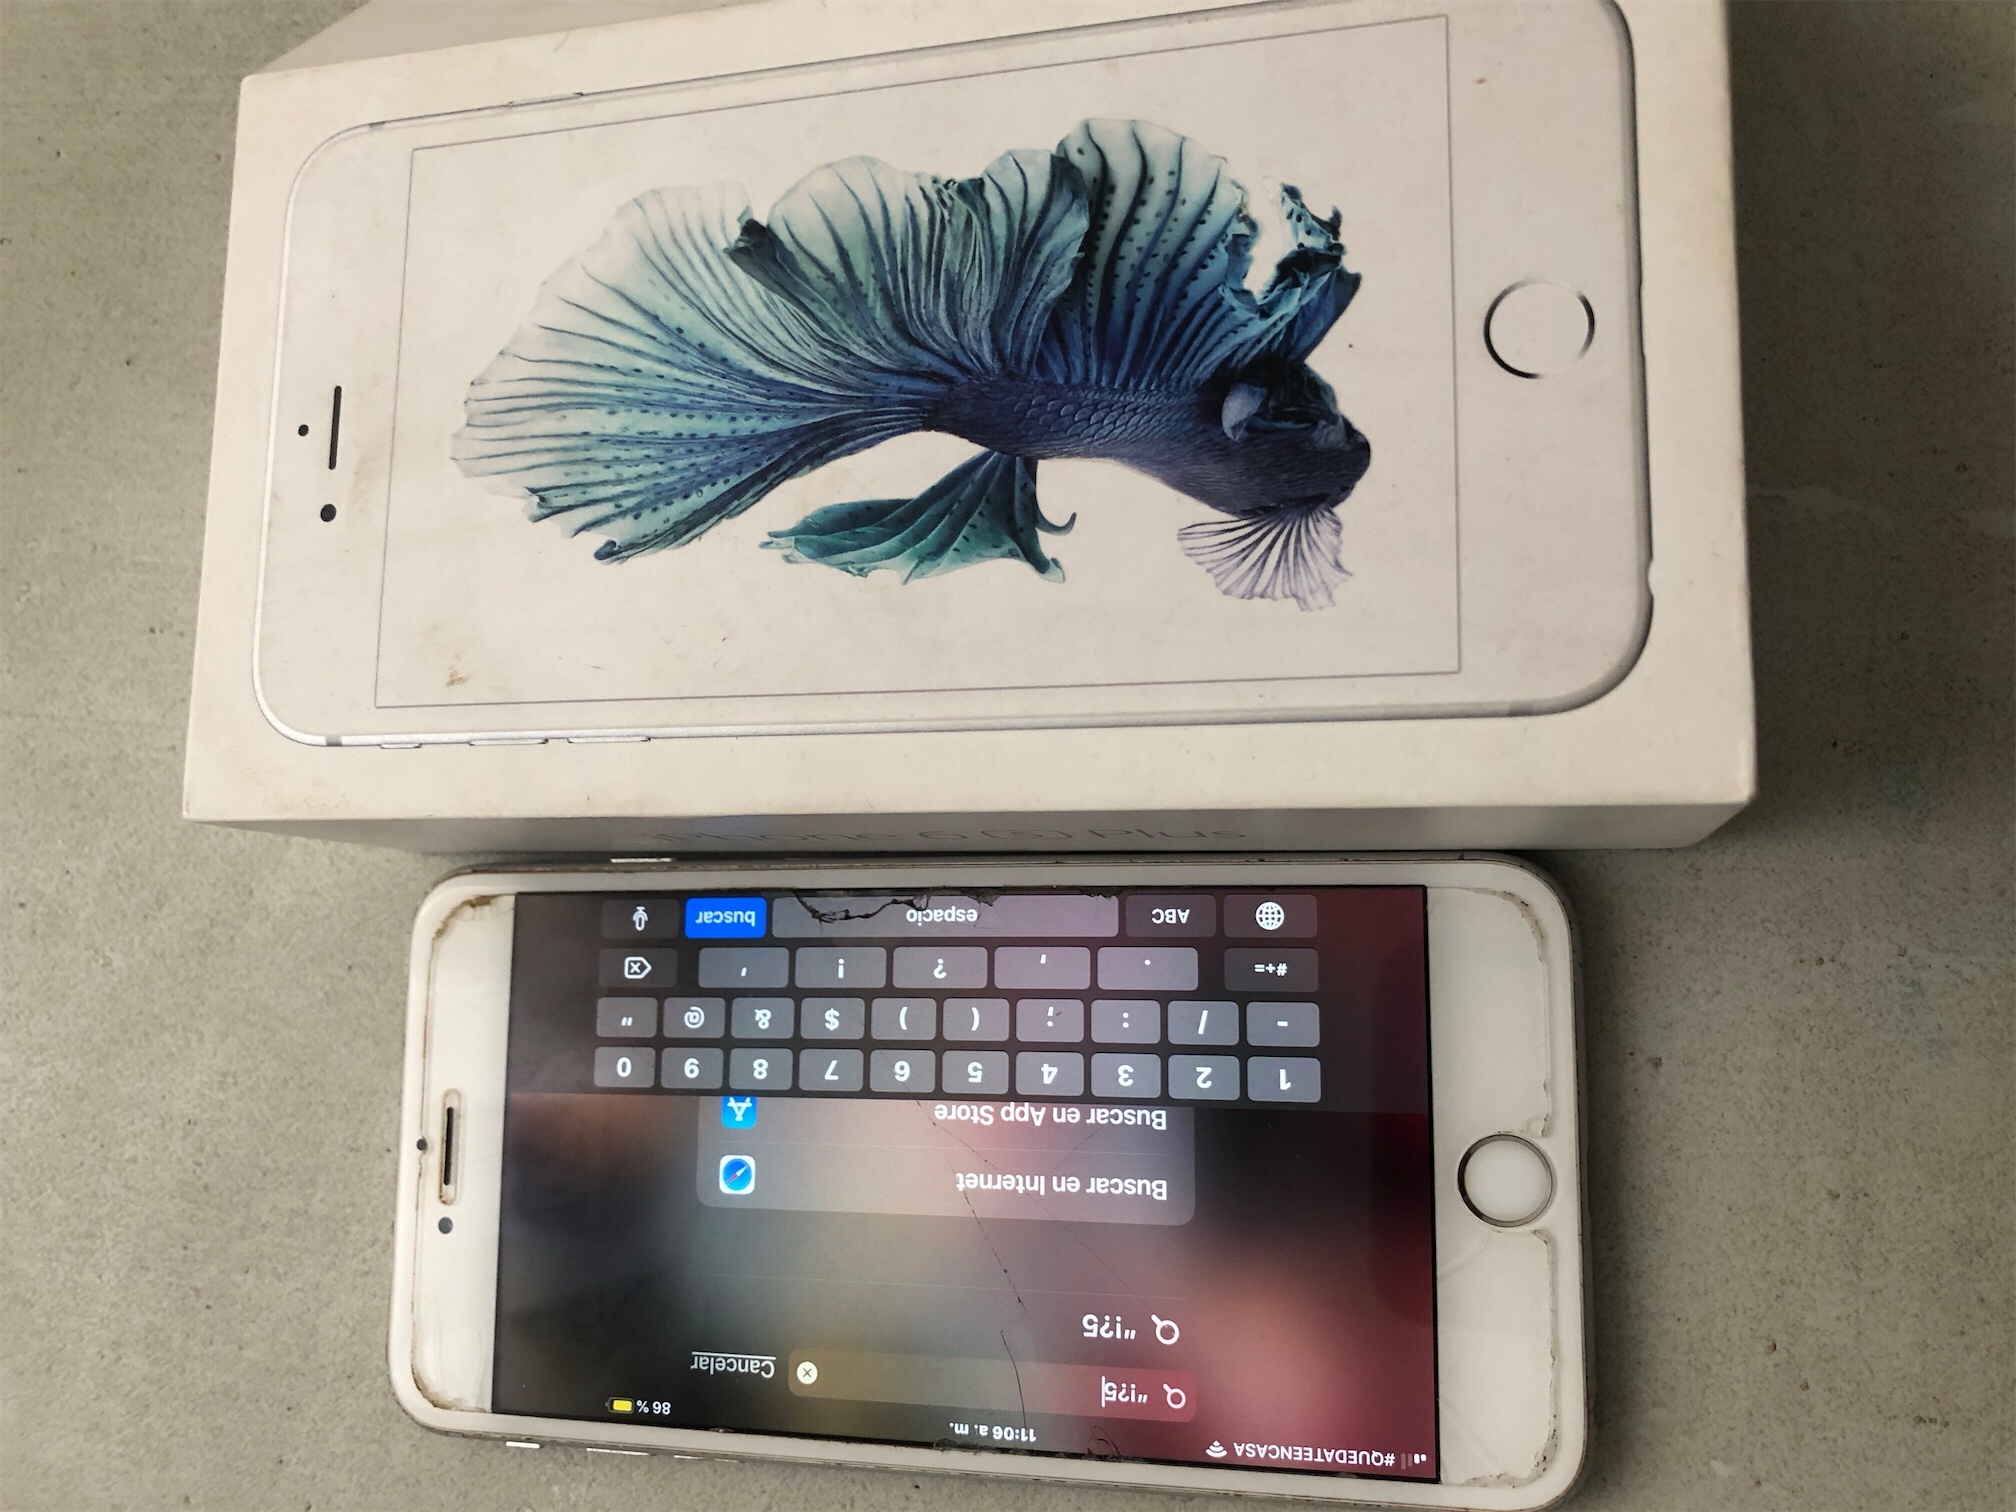 celulares y tabletas - iPhone 6plus 16gb